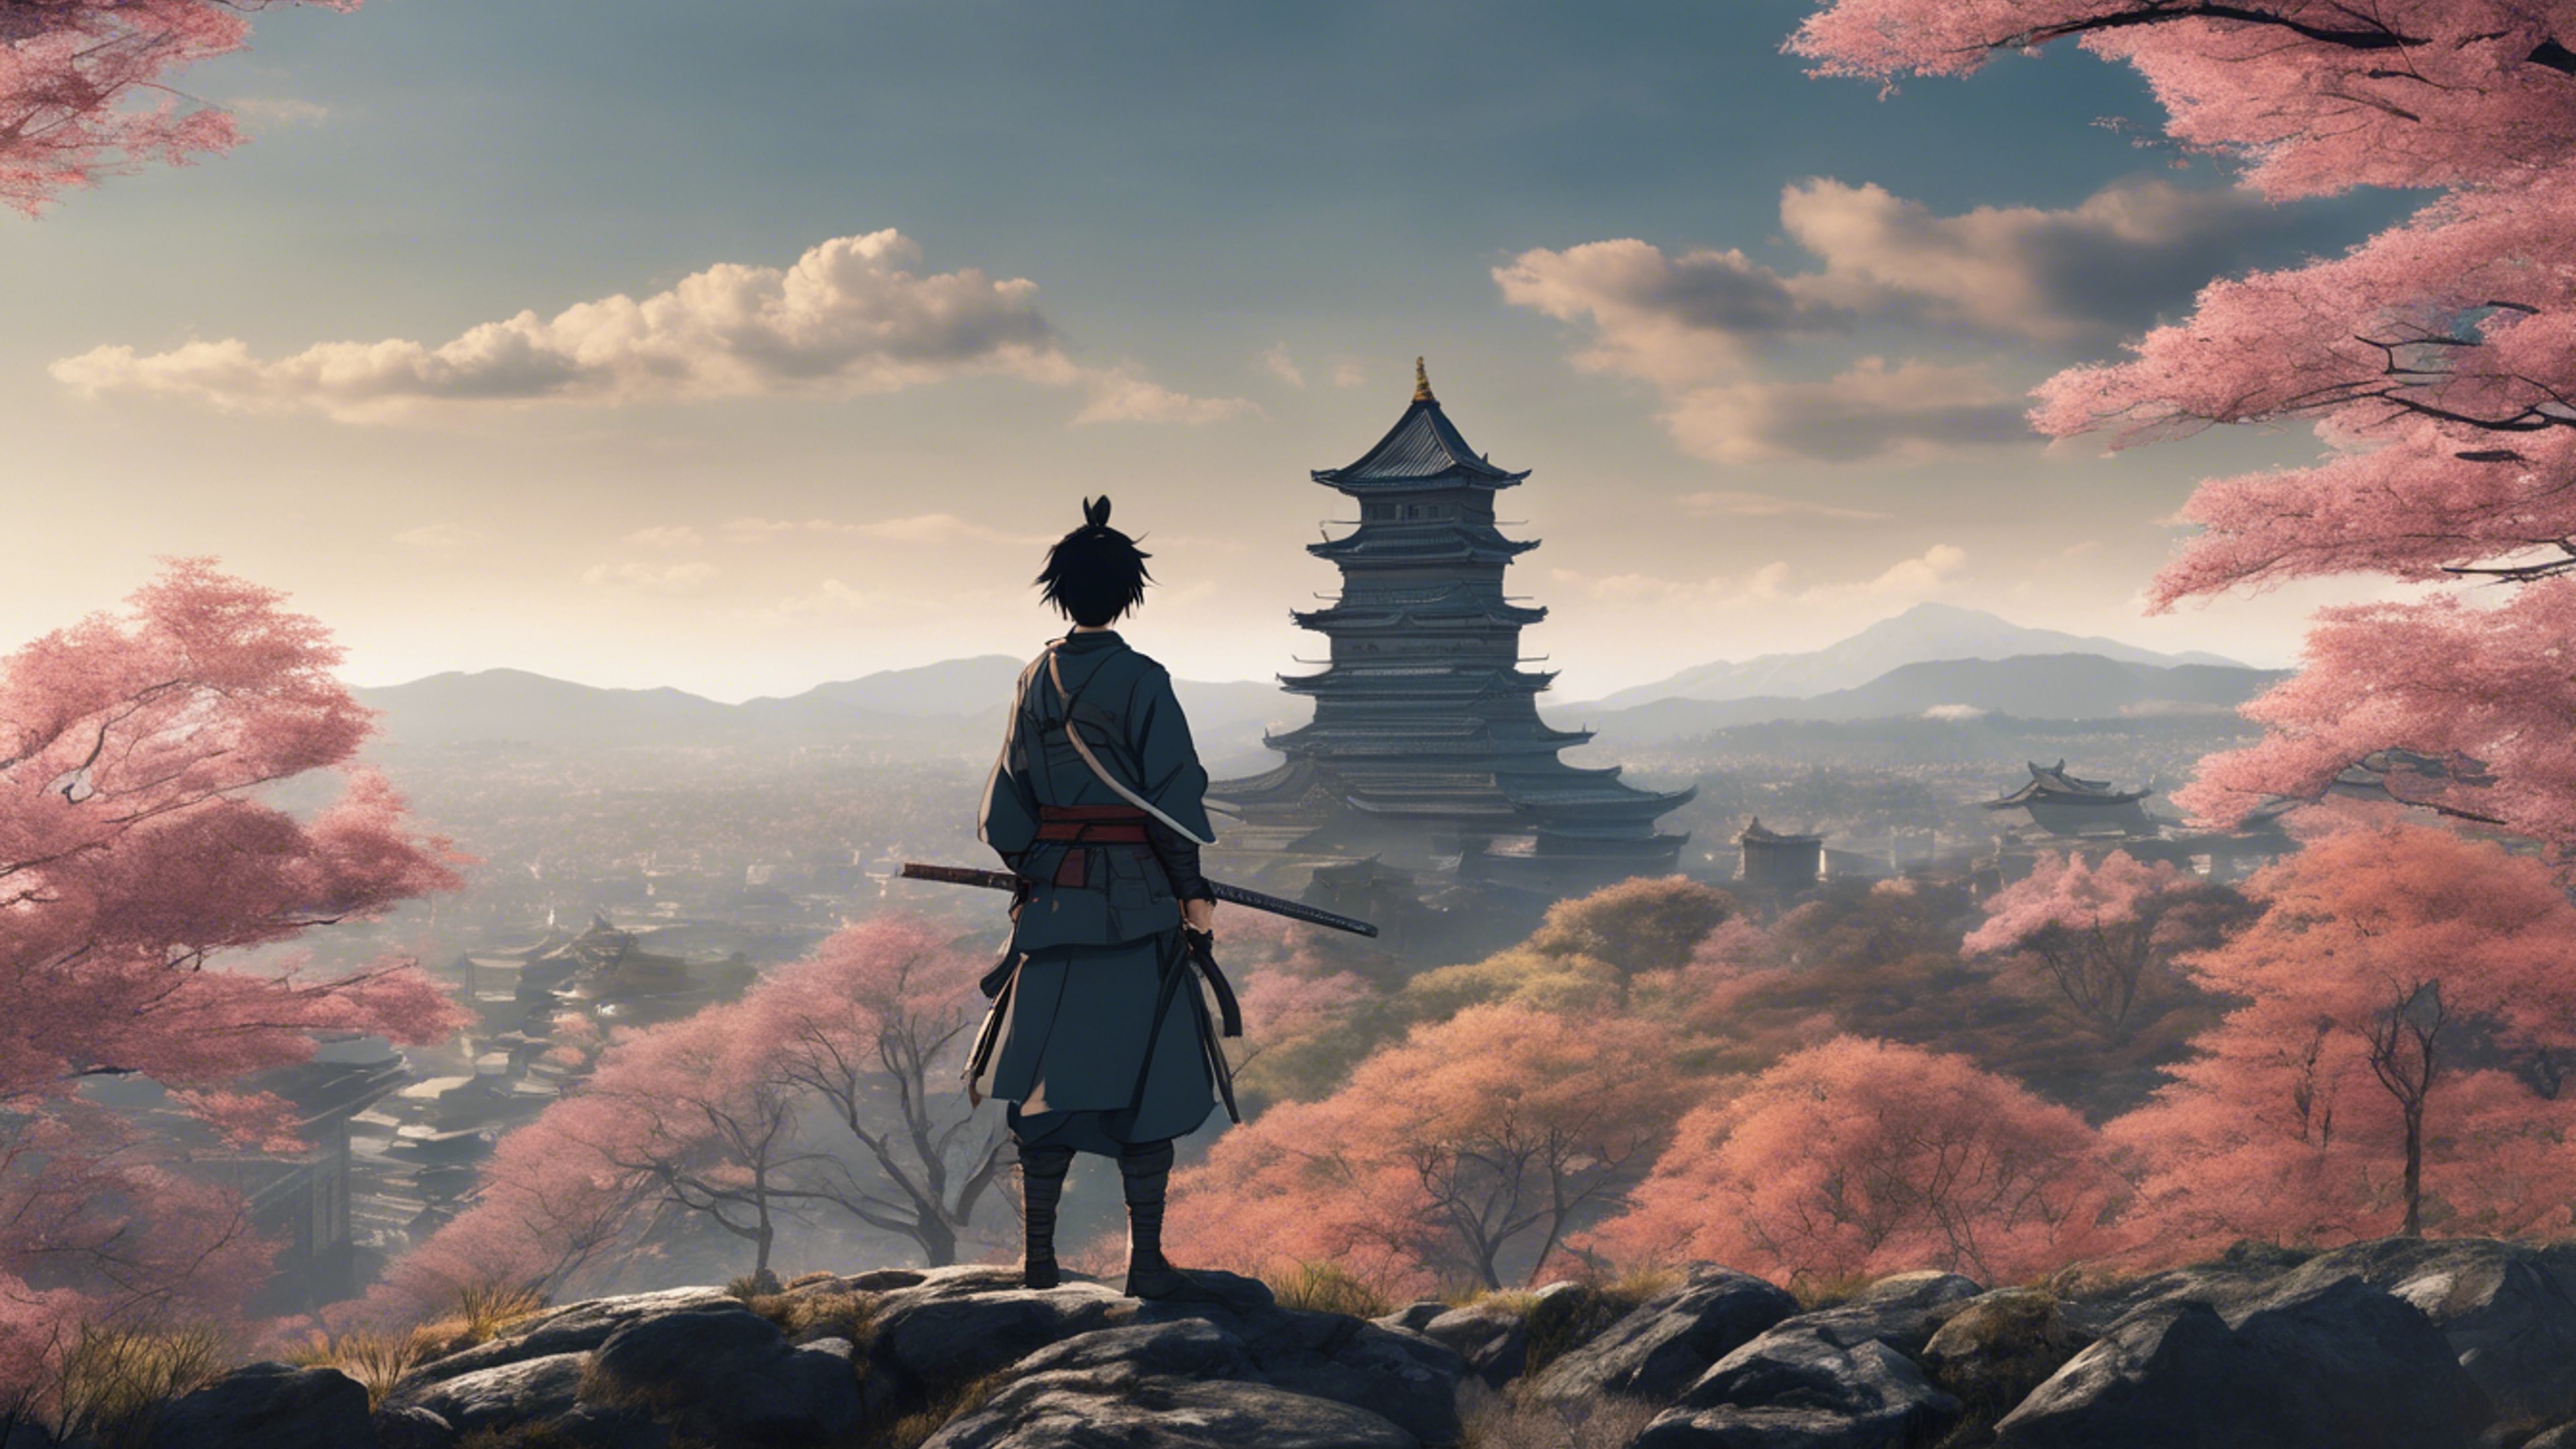 Anime samurai boy standing on a rocky hillside and looking towards a feudal-era Japanese castle. Tapet[9402636a9a6e4b8c90bb]